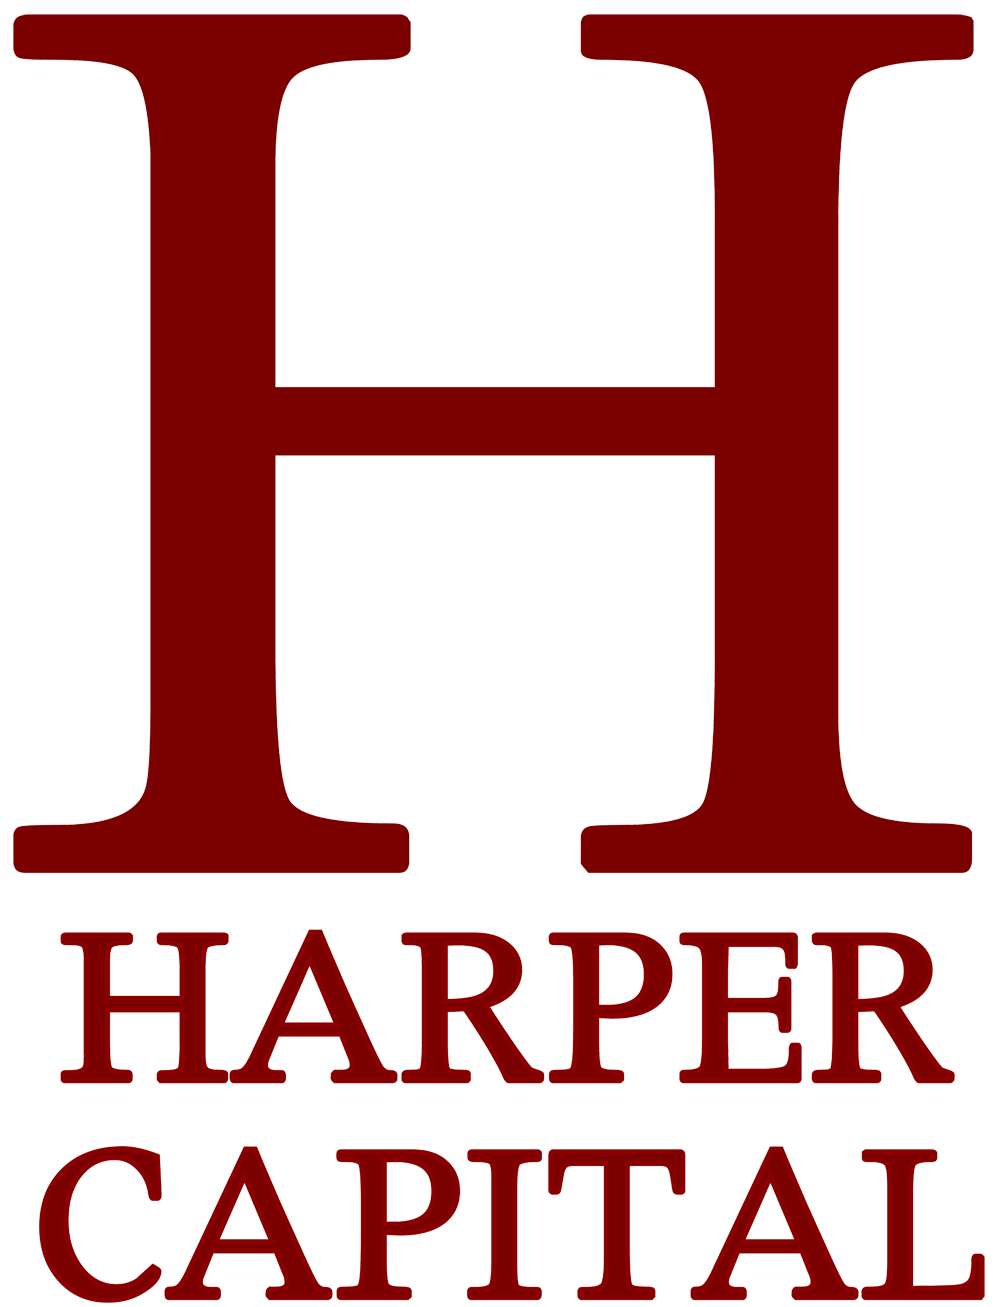 Harper Capital Partners, LLC